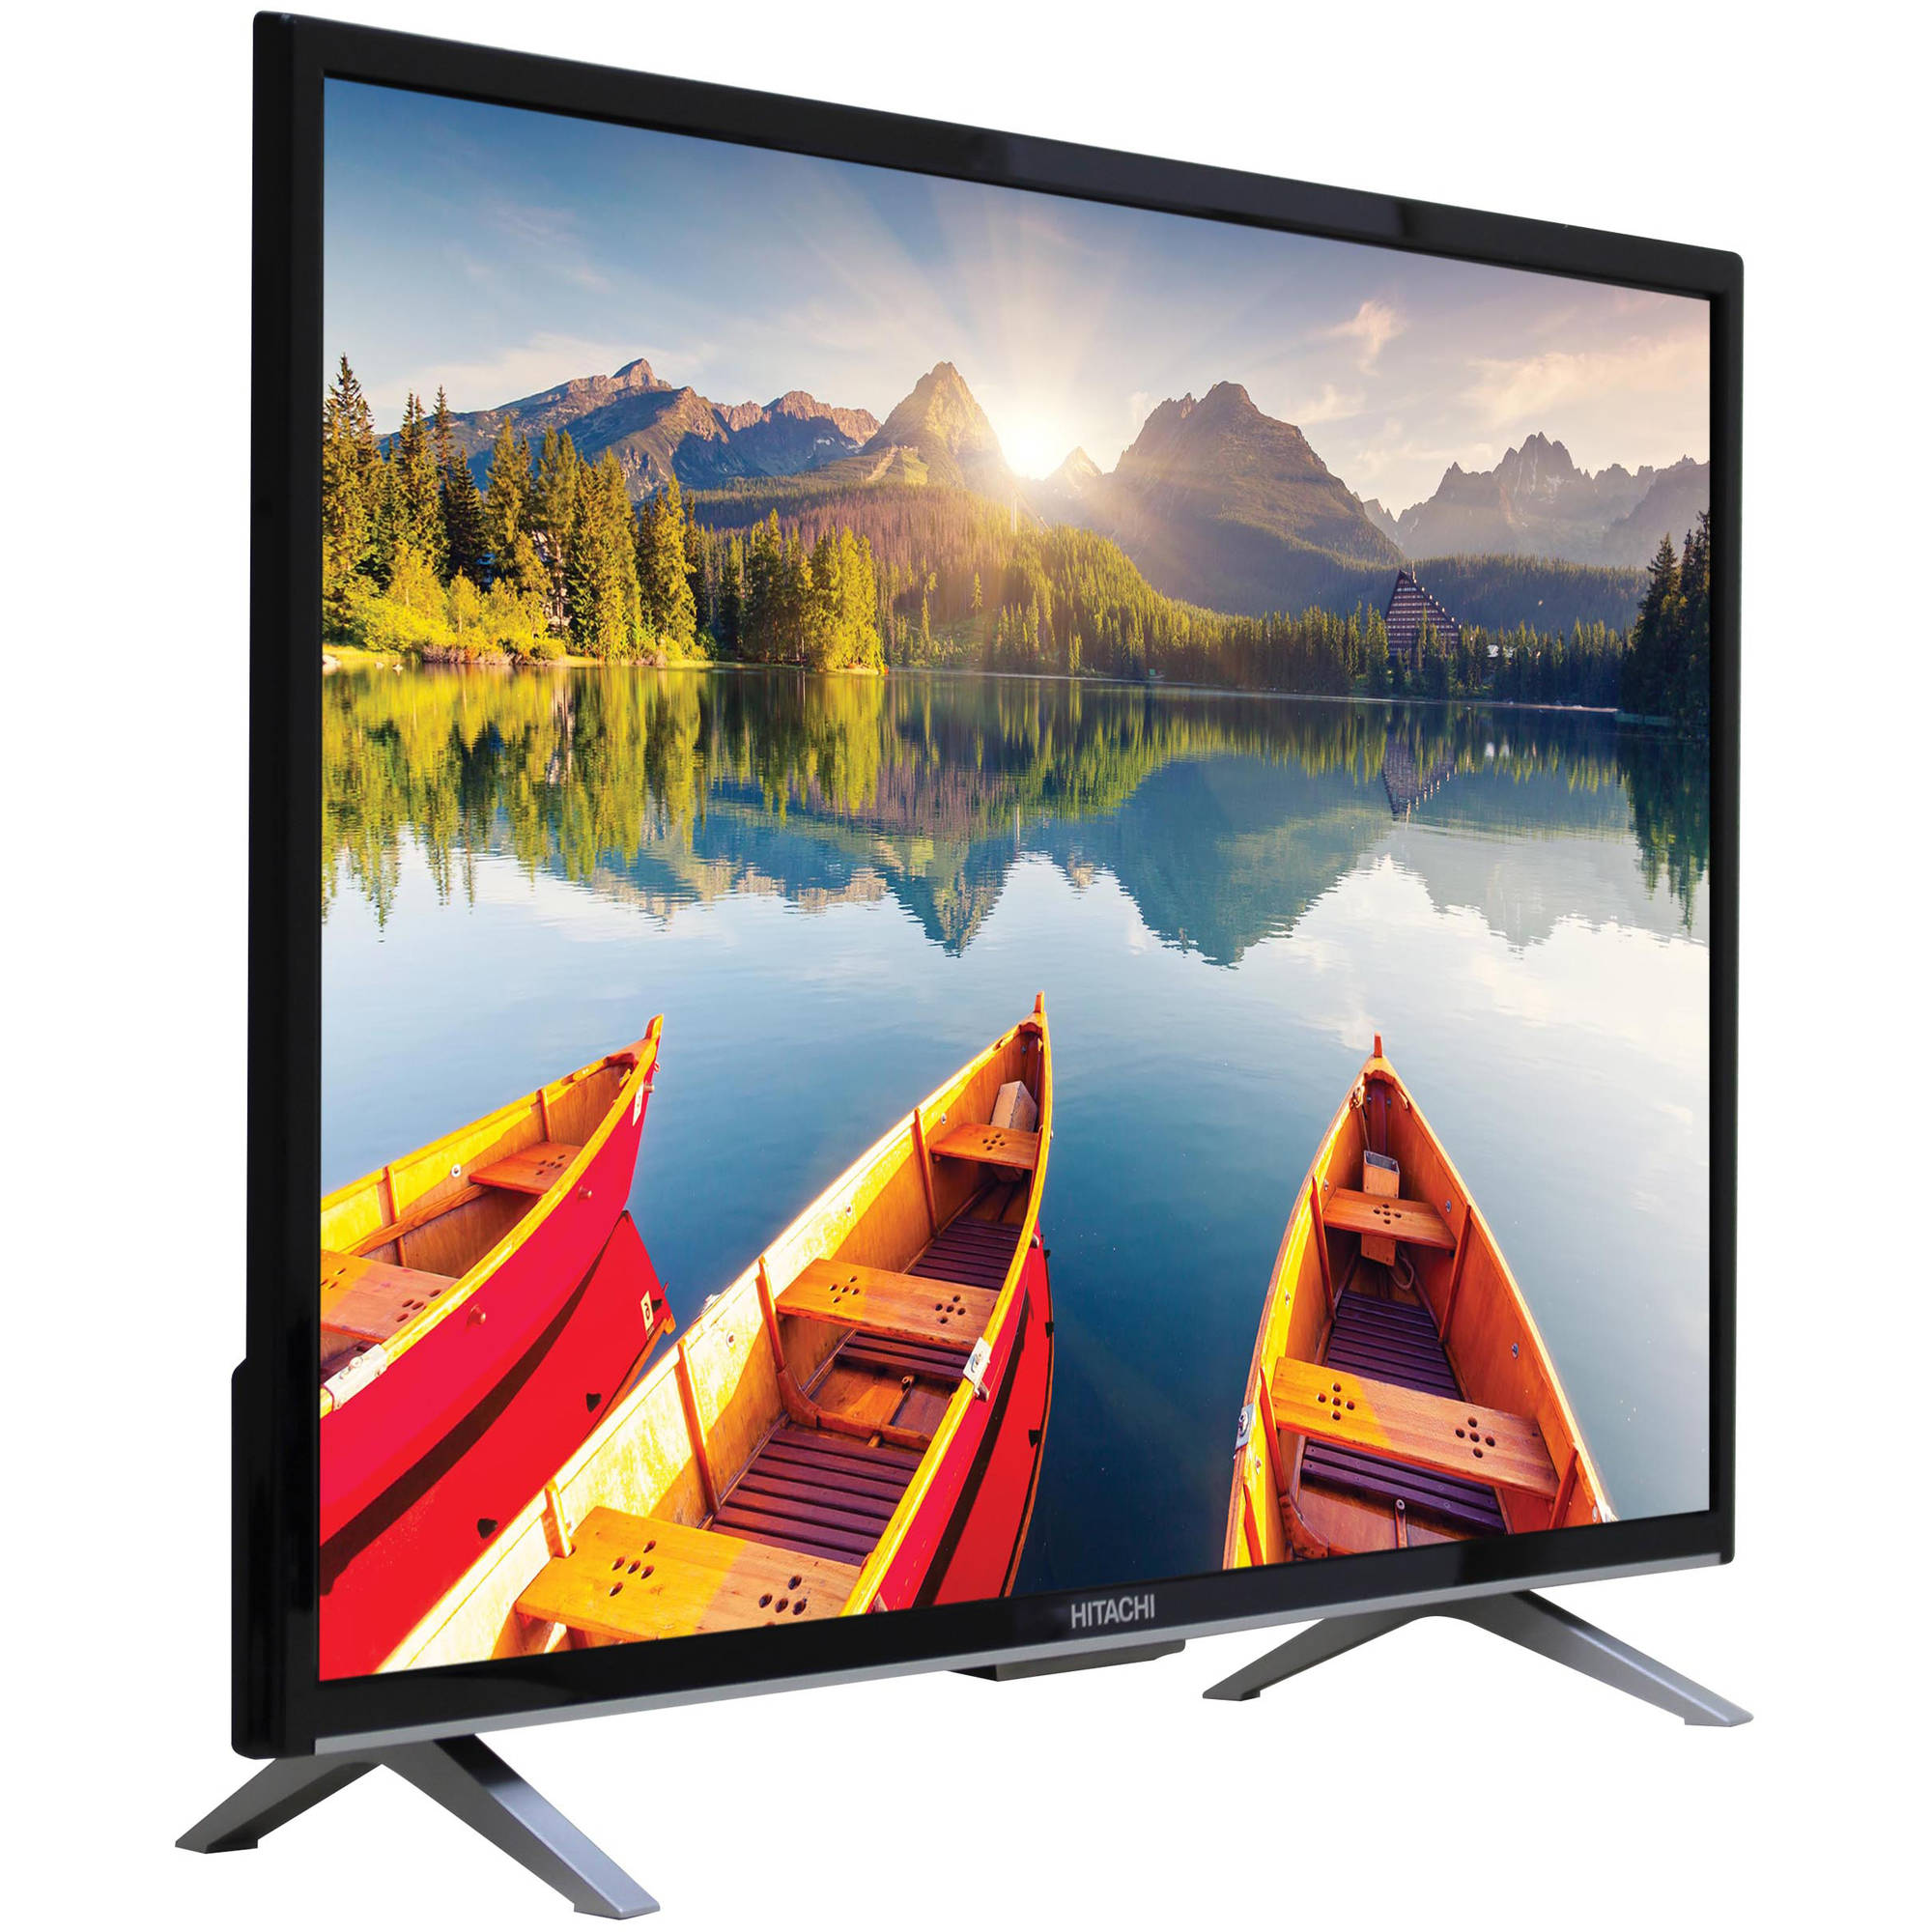 Hitachi Alpha 32" Class HD (720p) LED Smart TV (LE32M4S9) - image 2 of 11